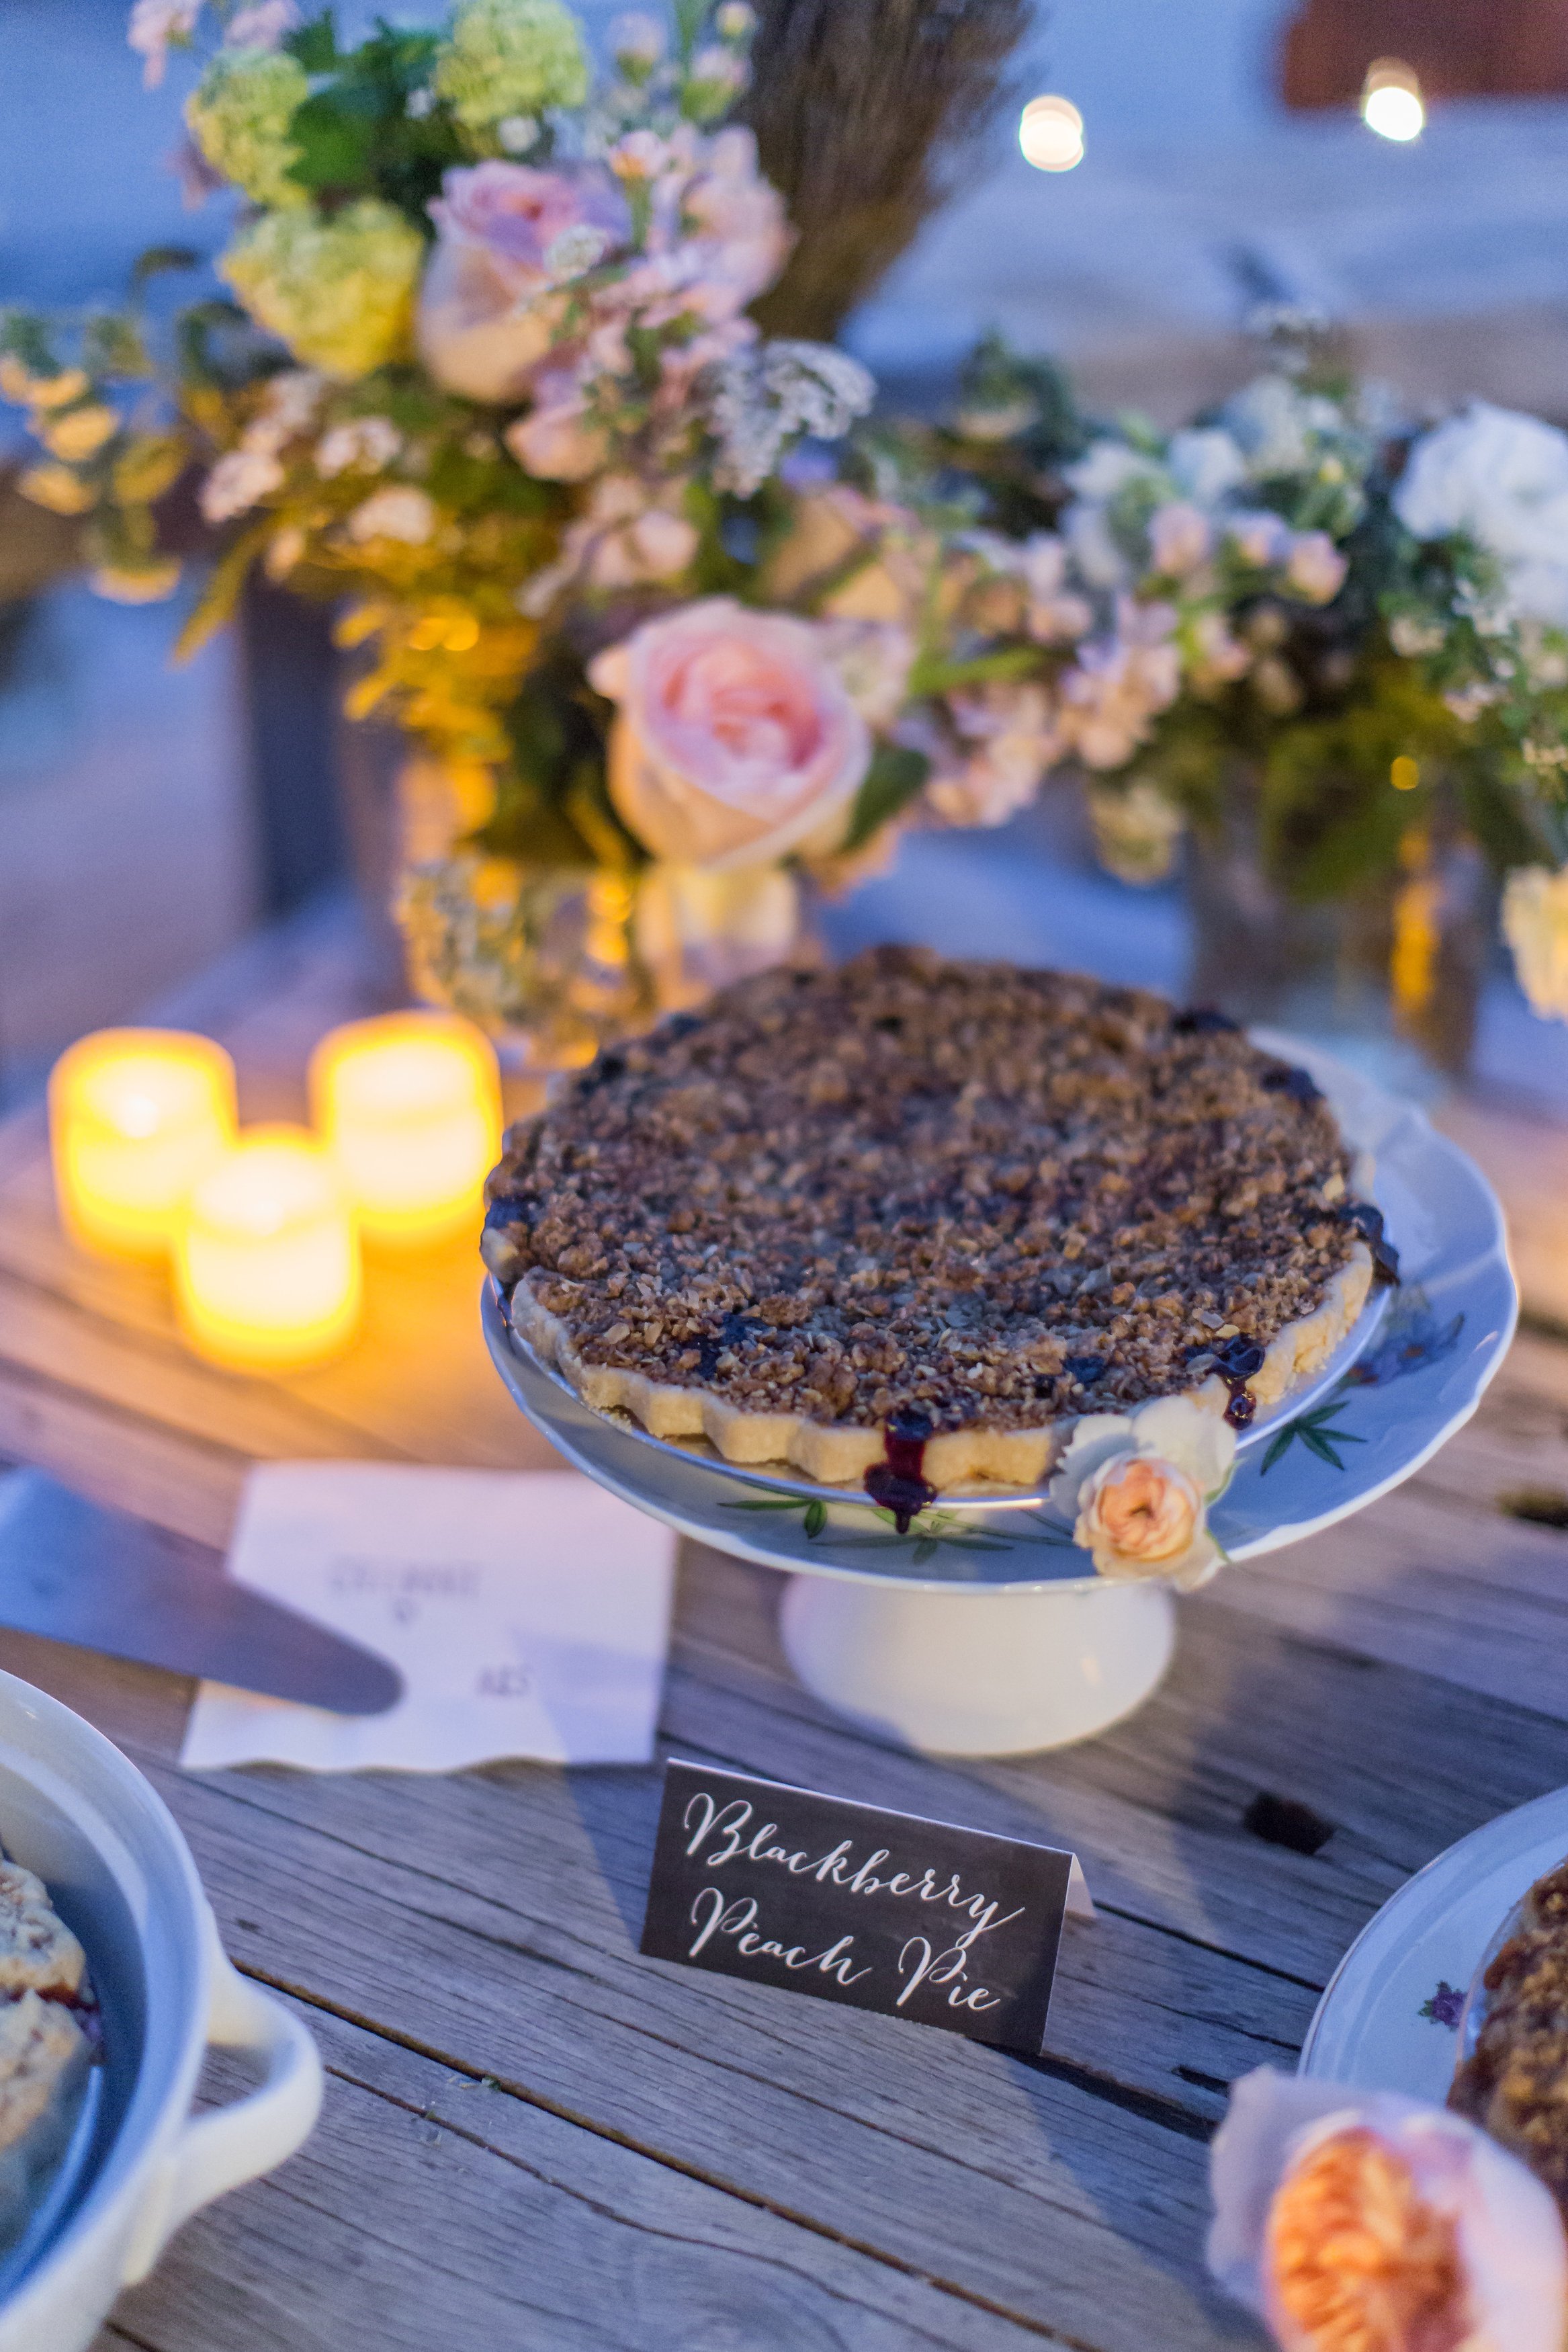 www.santabarbarawedding.com | Kiel Rucker Photography | Country Catering Company | Blackberry Peach Pie at Reception